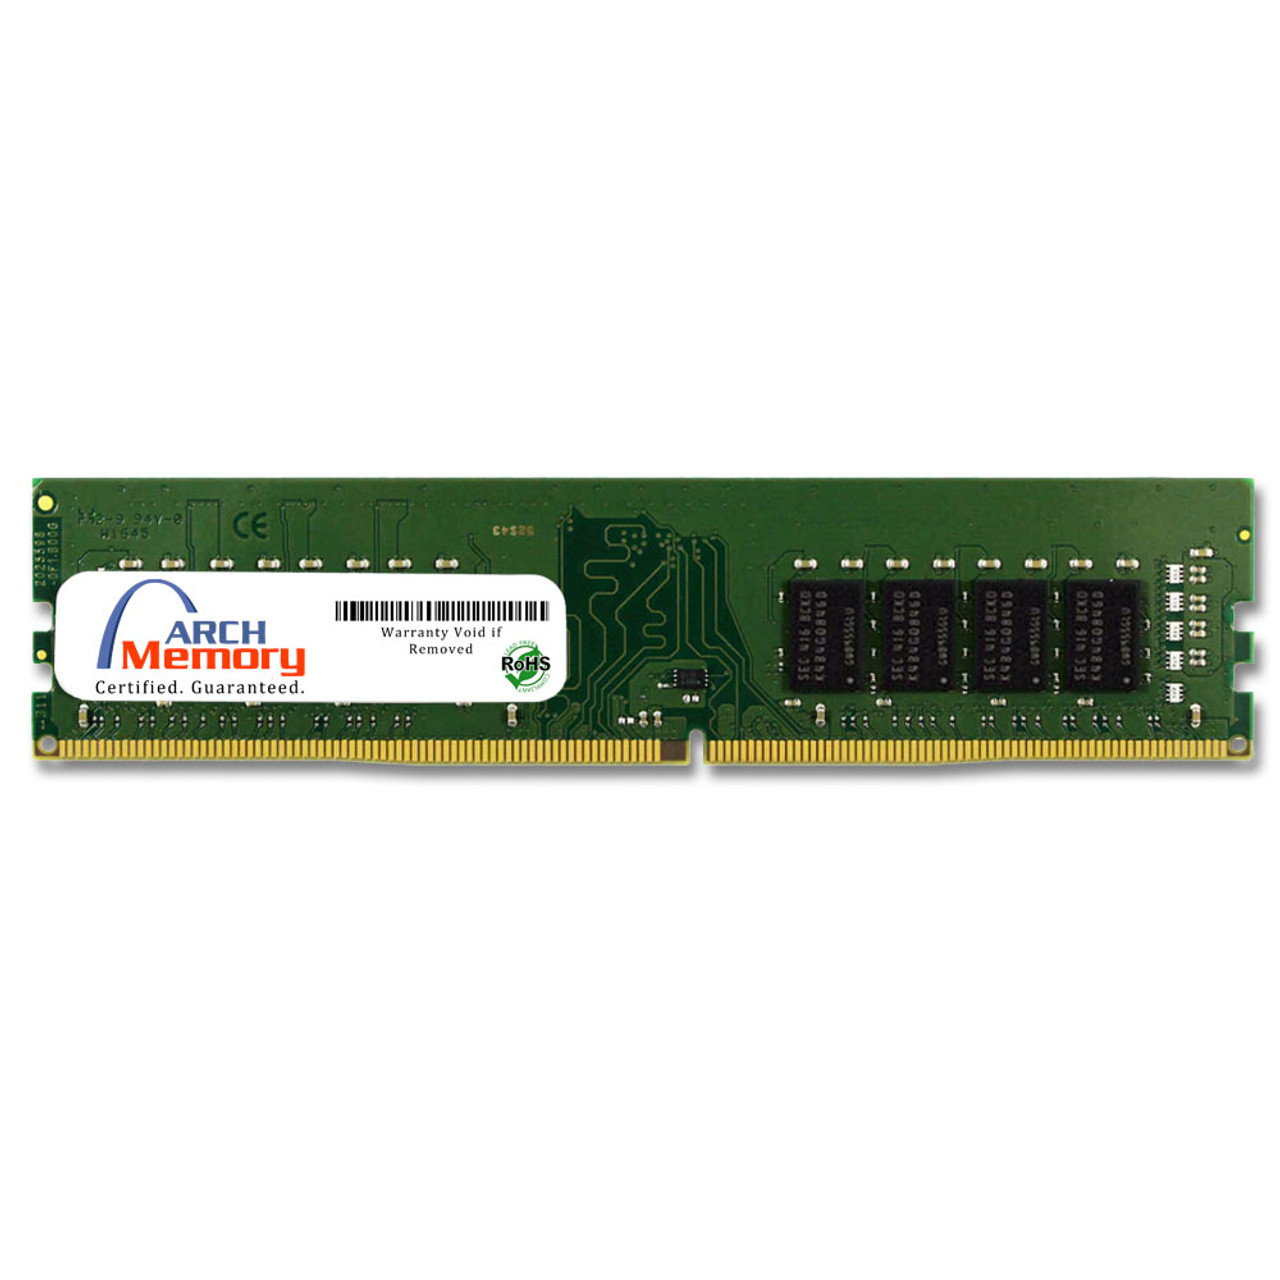 eBay*8GB 288-Pin DDR4-2666 PC4-21300 UDIMM (1Rx8) RAM